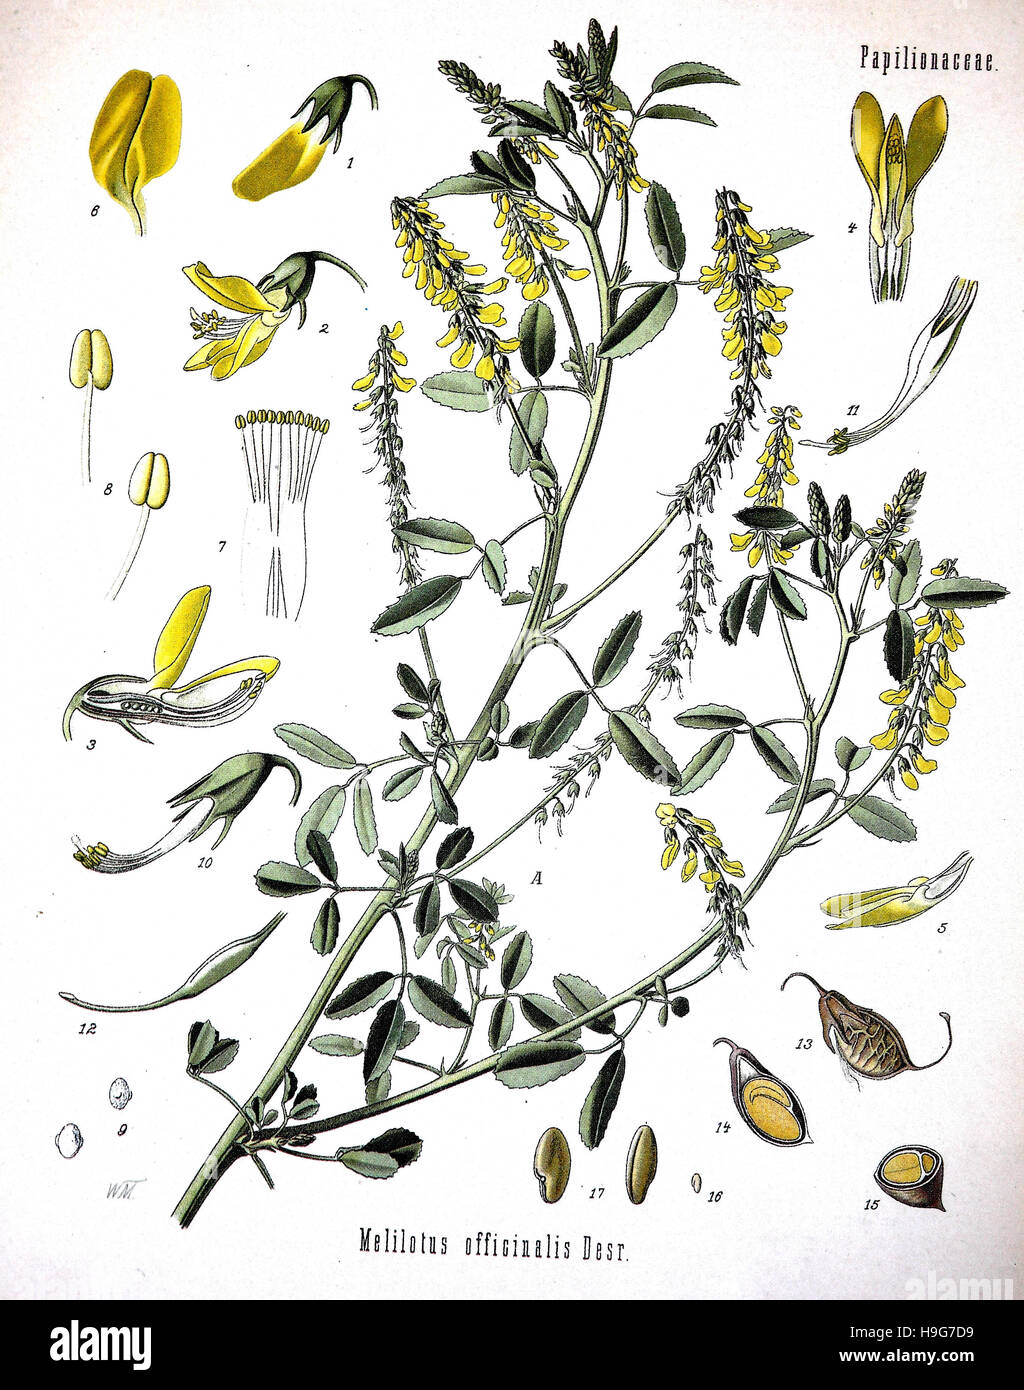 Melilotus officinalis, noto come giallo meliloto, giallo melilot, melilot nervata e melilot comune,pianta medicinale Foto Stock